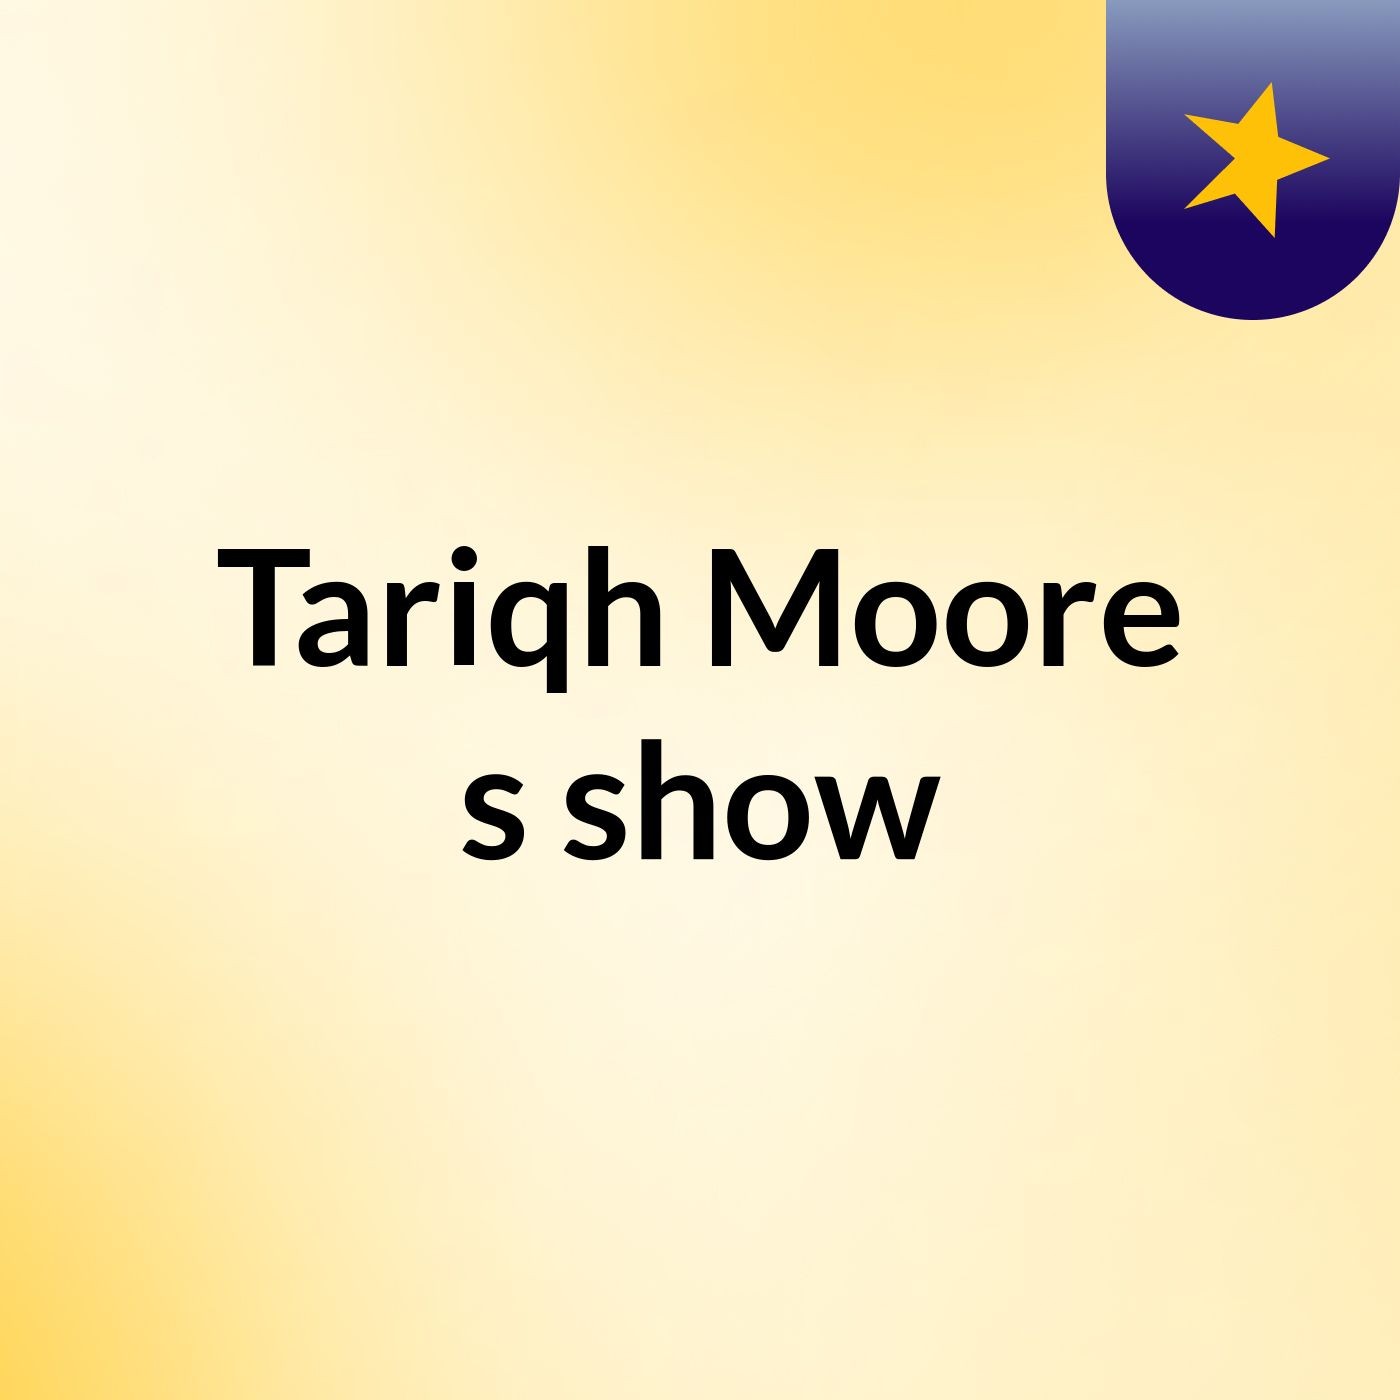 Tariqh Moore's show